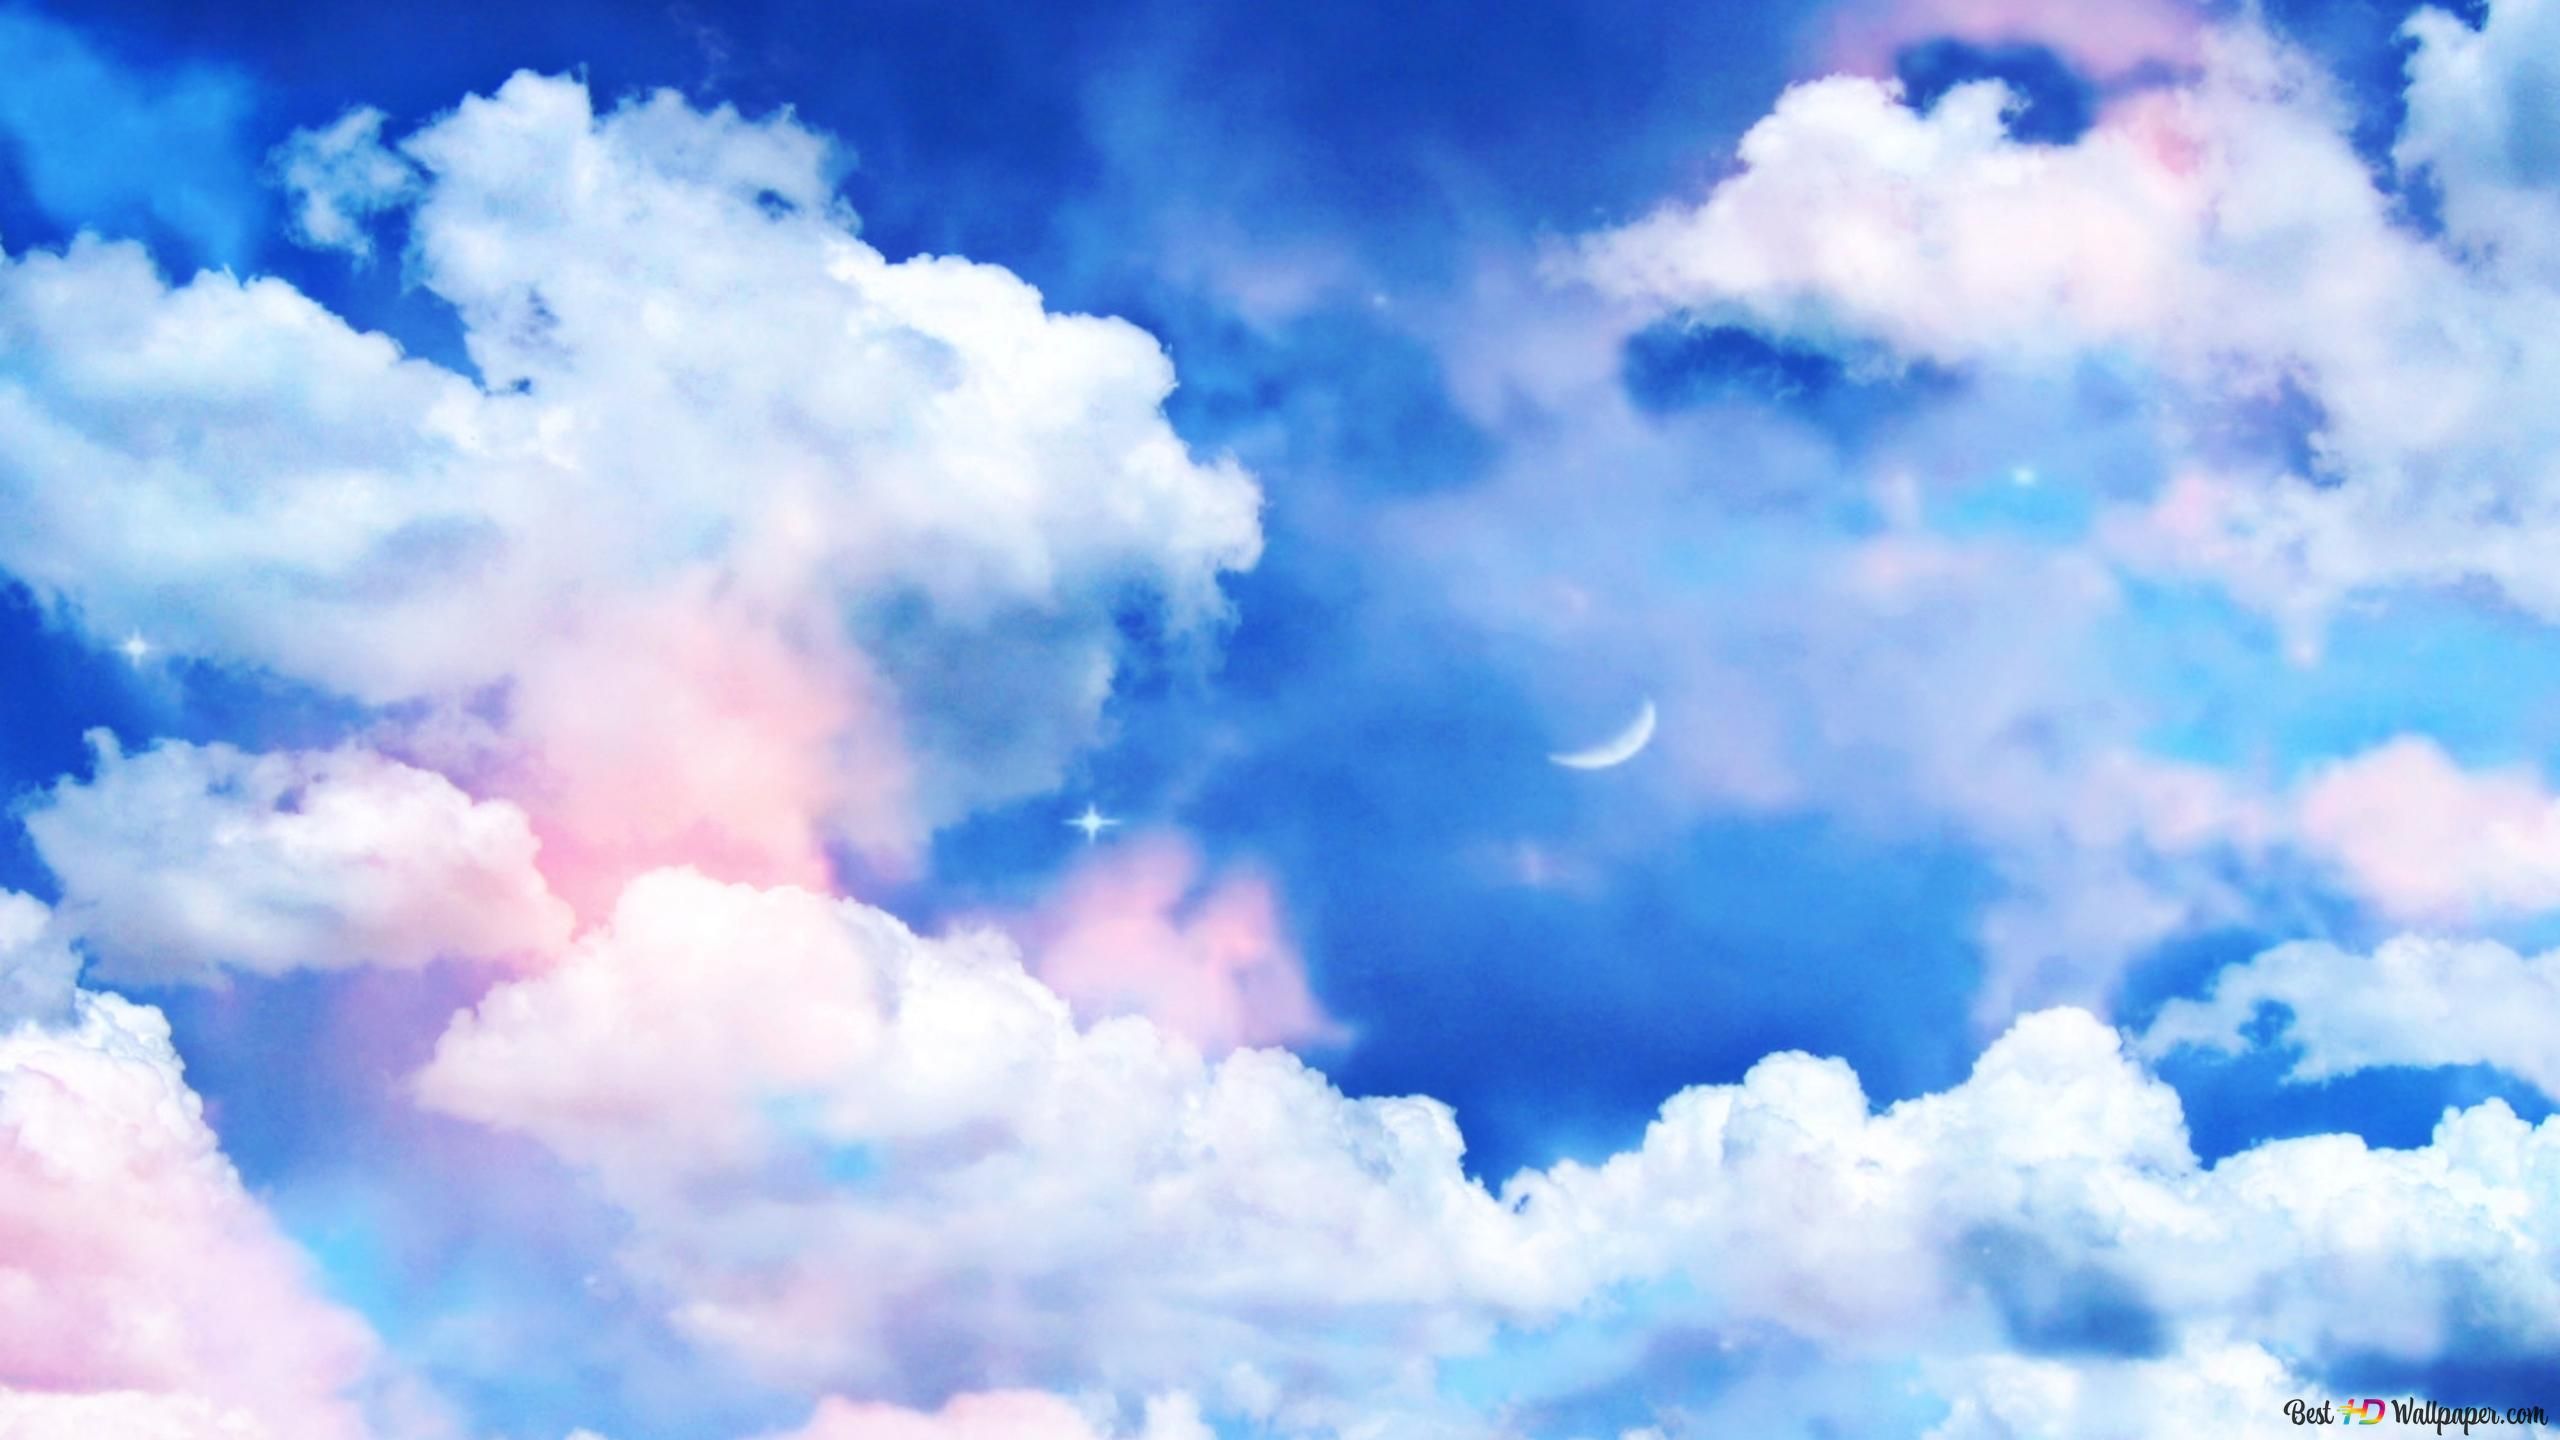  2560x1440 Hintergrundbild 2560x1440. Cloudy night aesthetic 4K wallpaper download